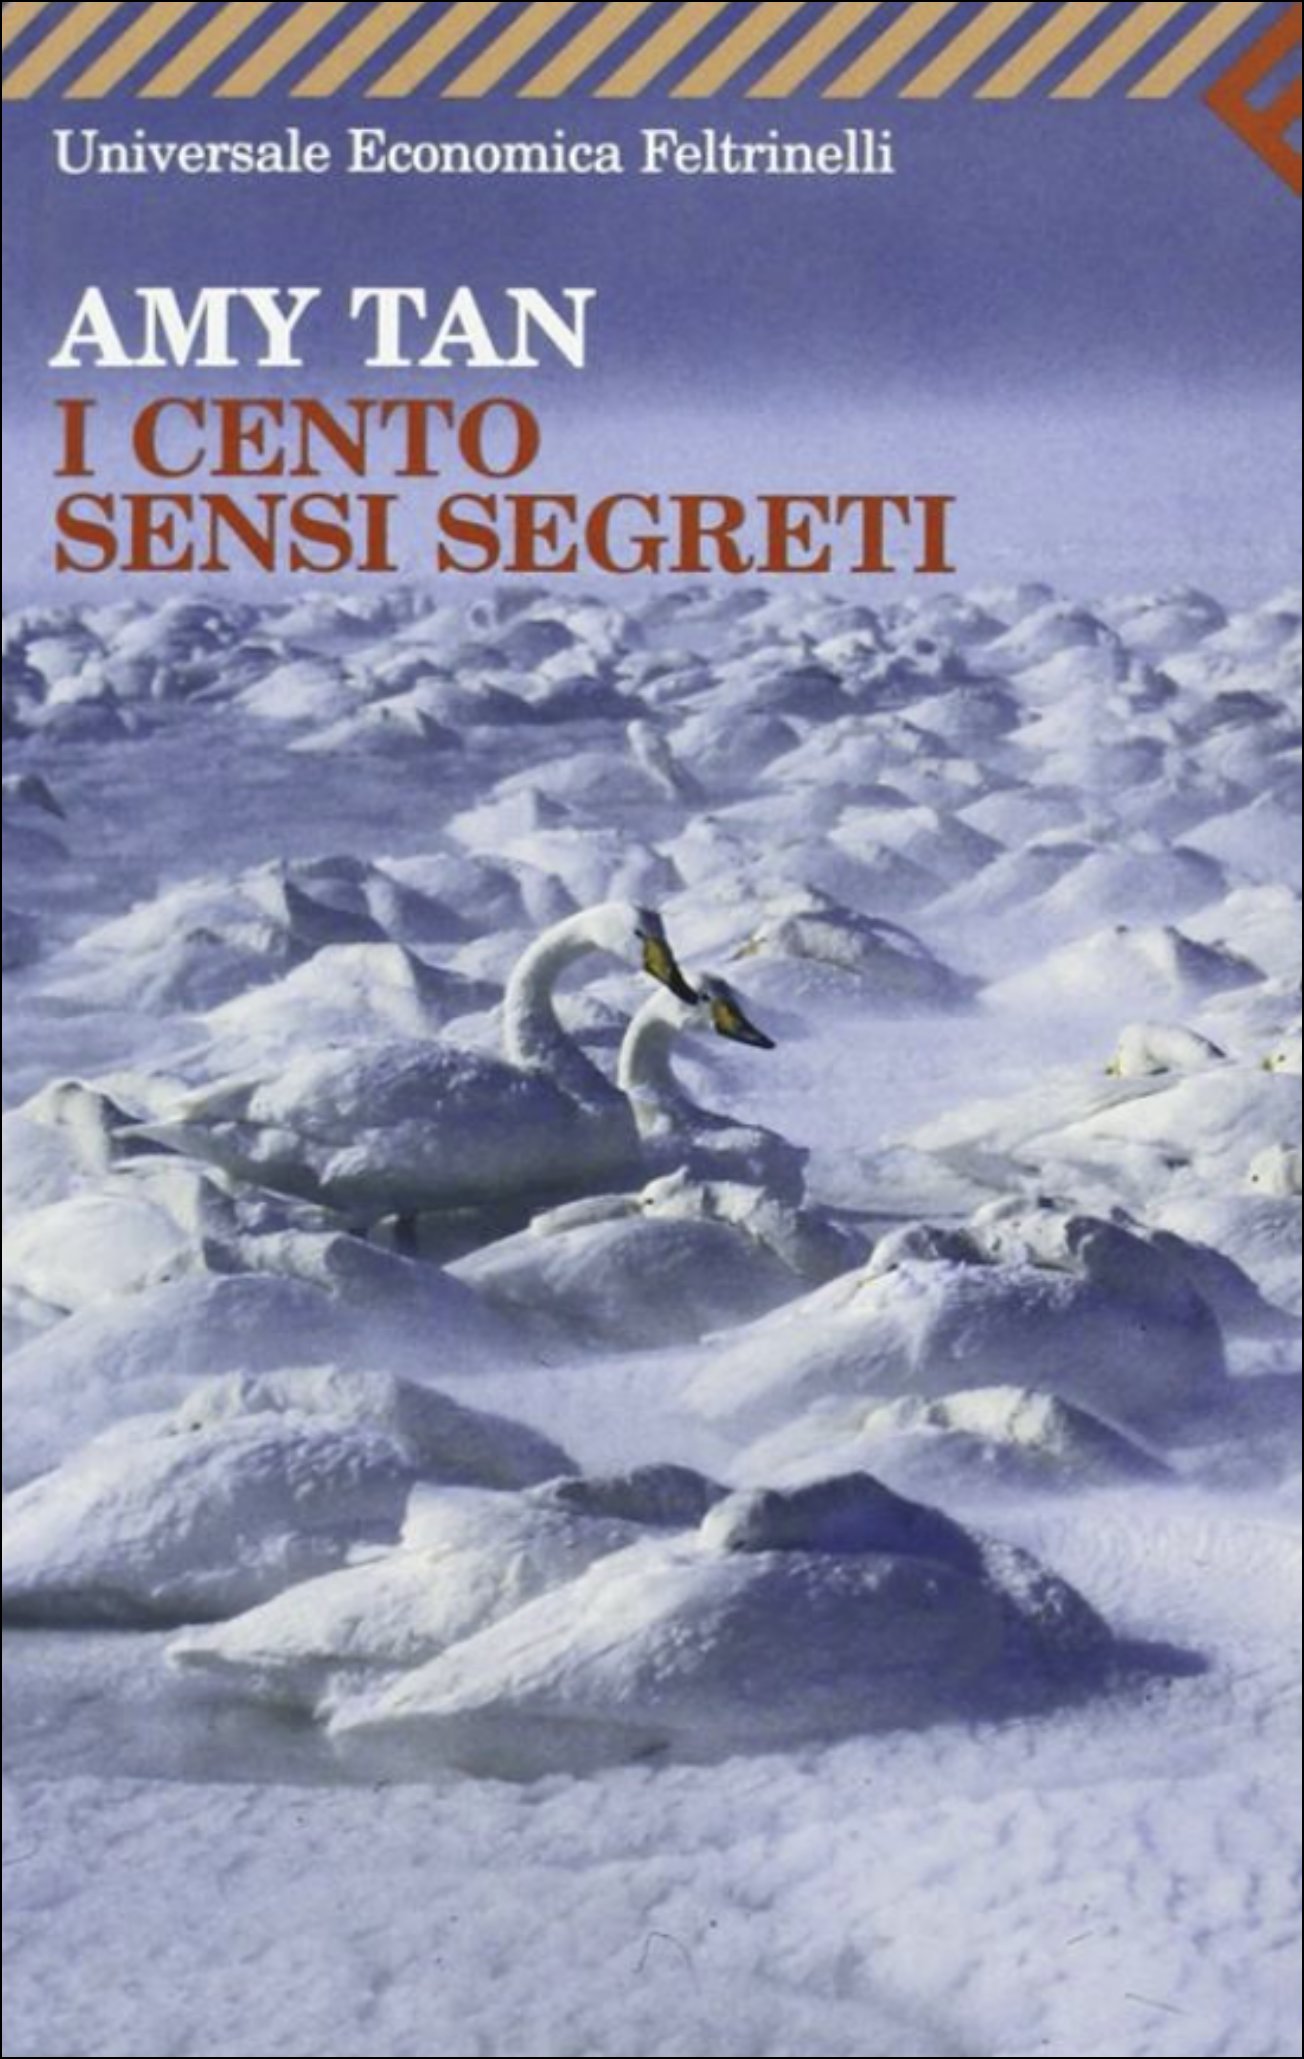 More about I cento sensi segreti